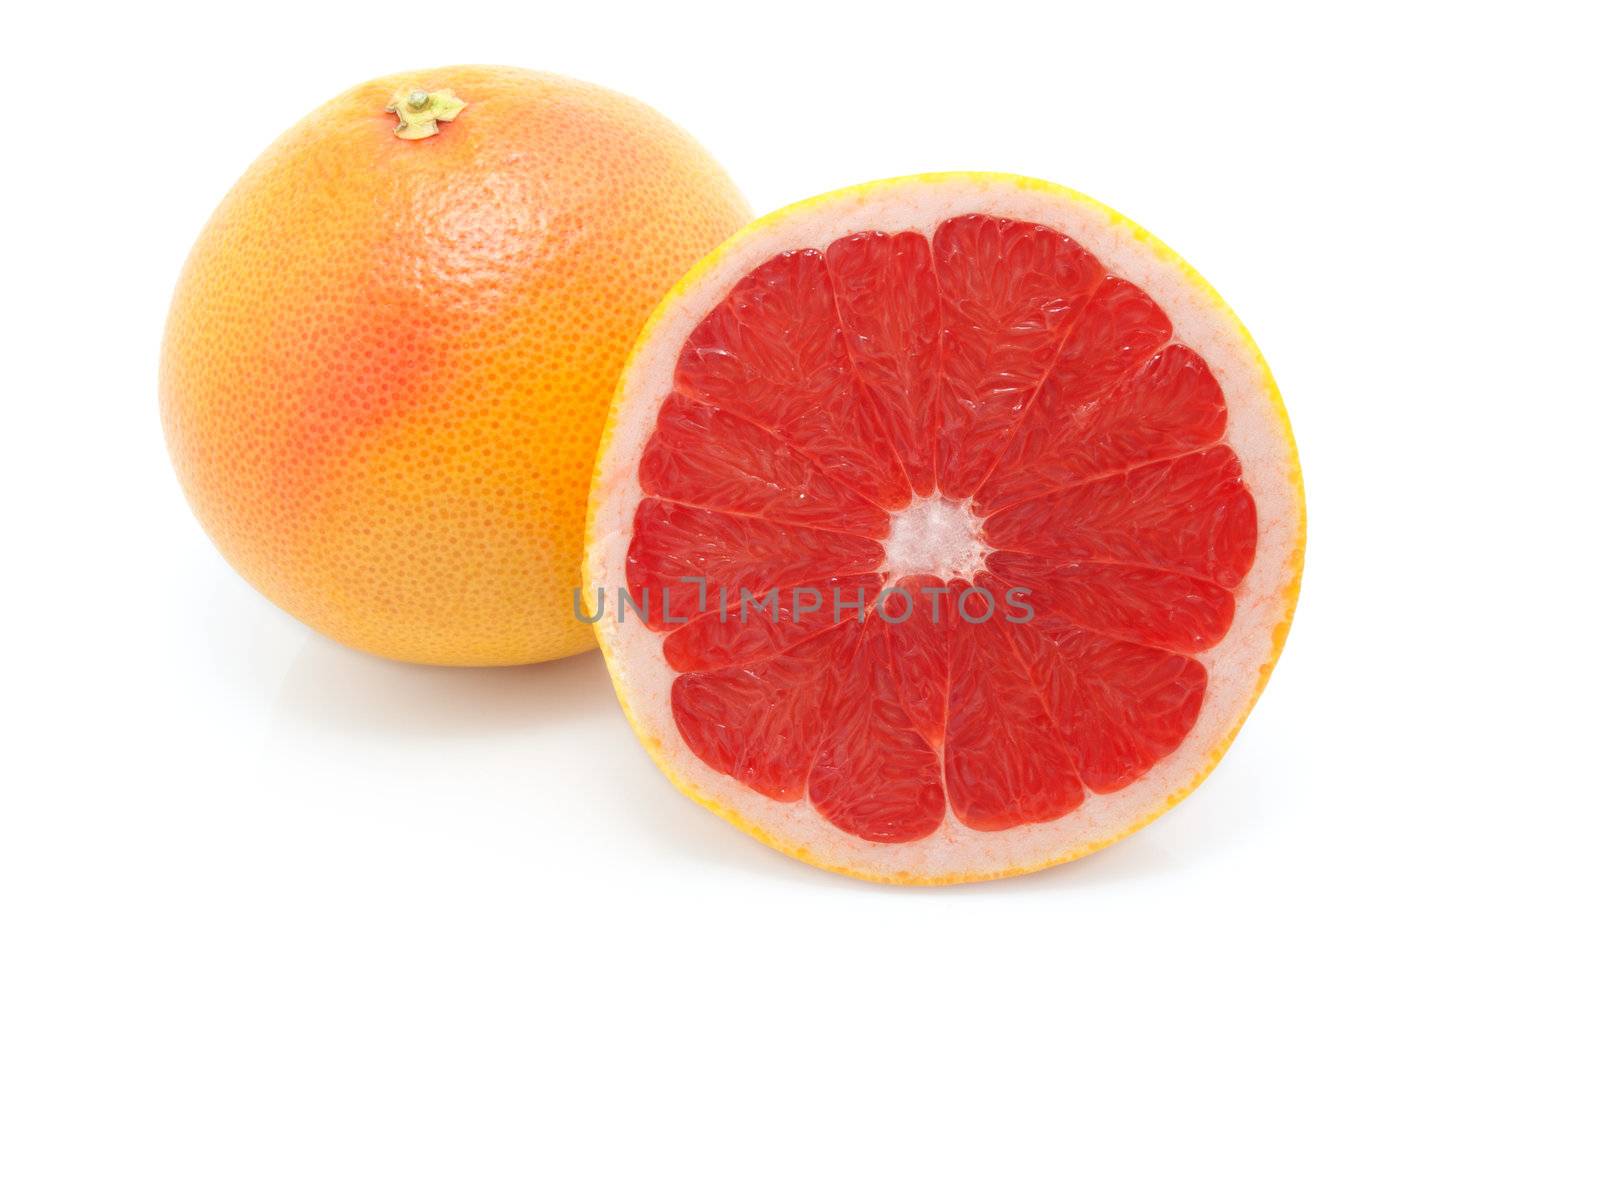 grapefruit on white background  by motorolka